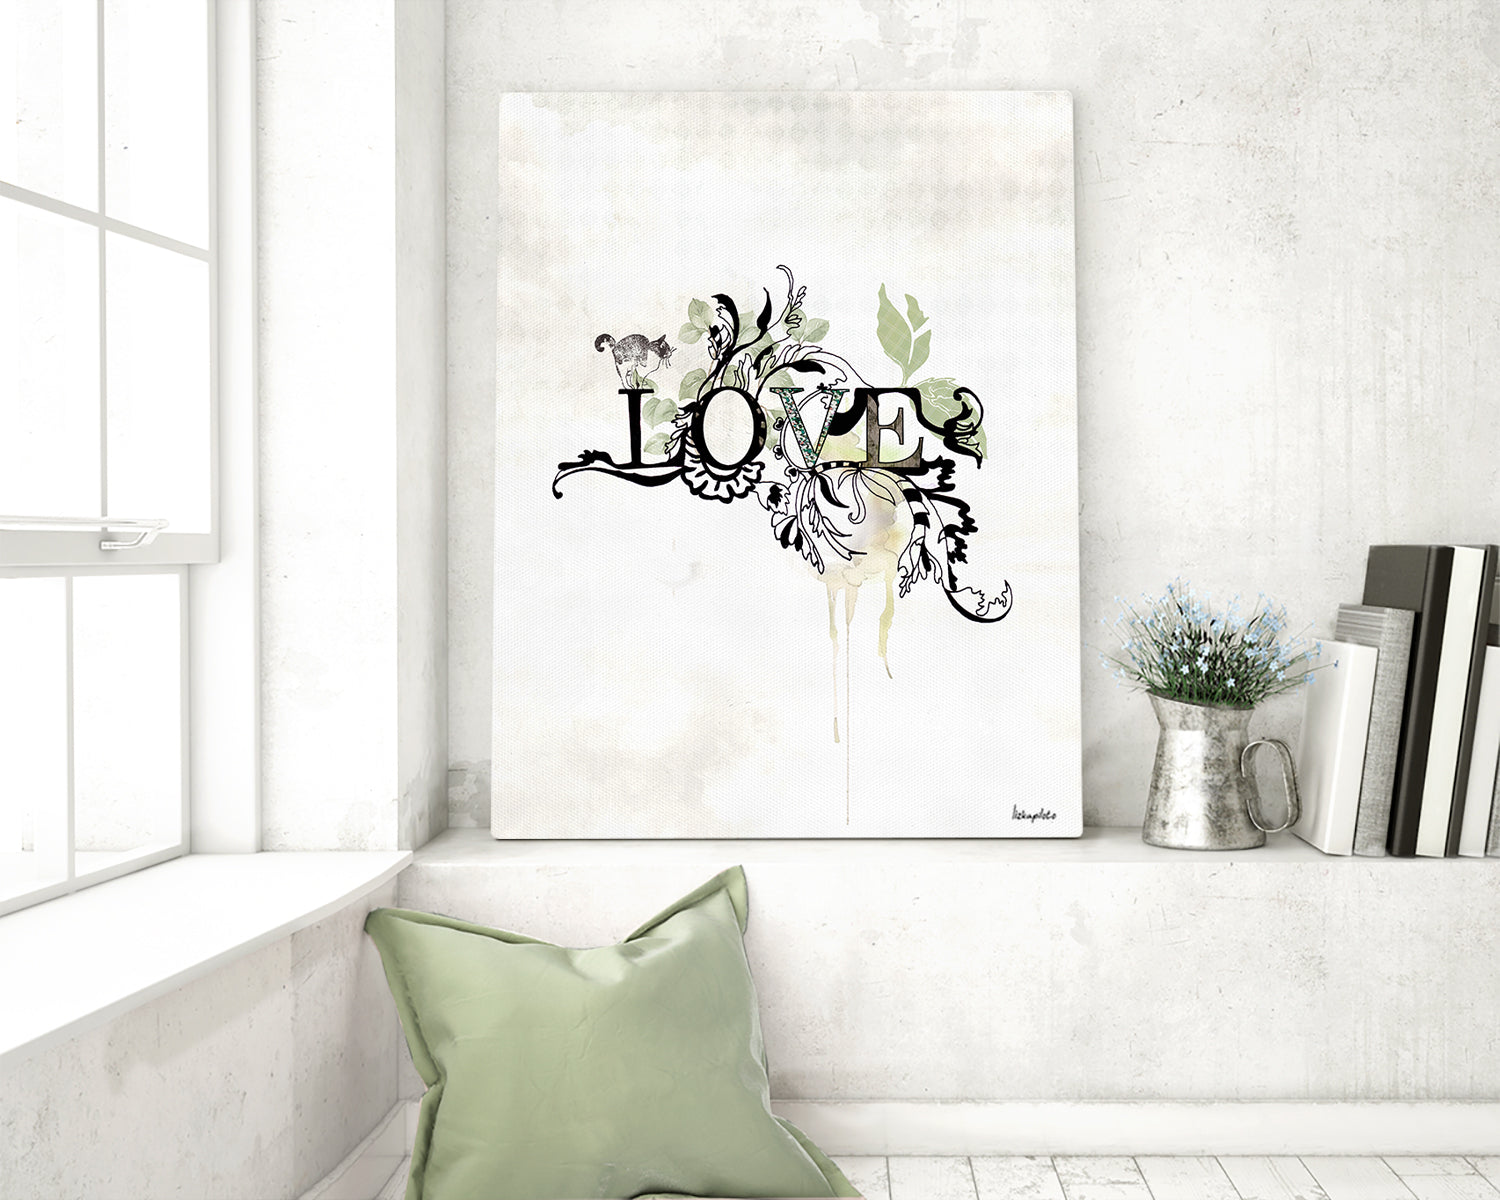 Love painting, love illustration